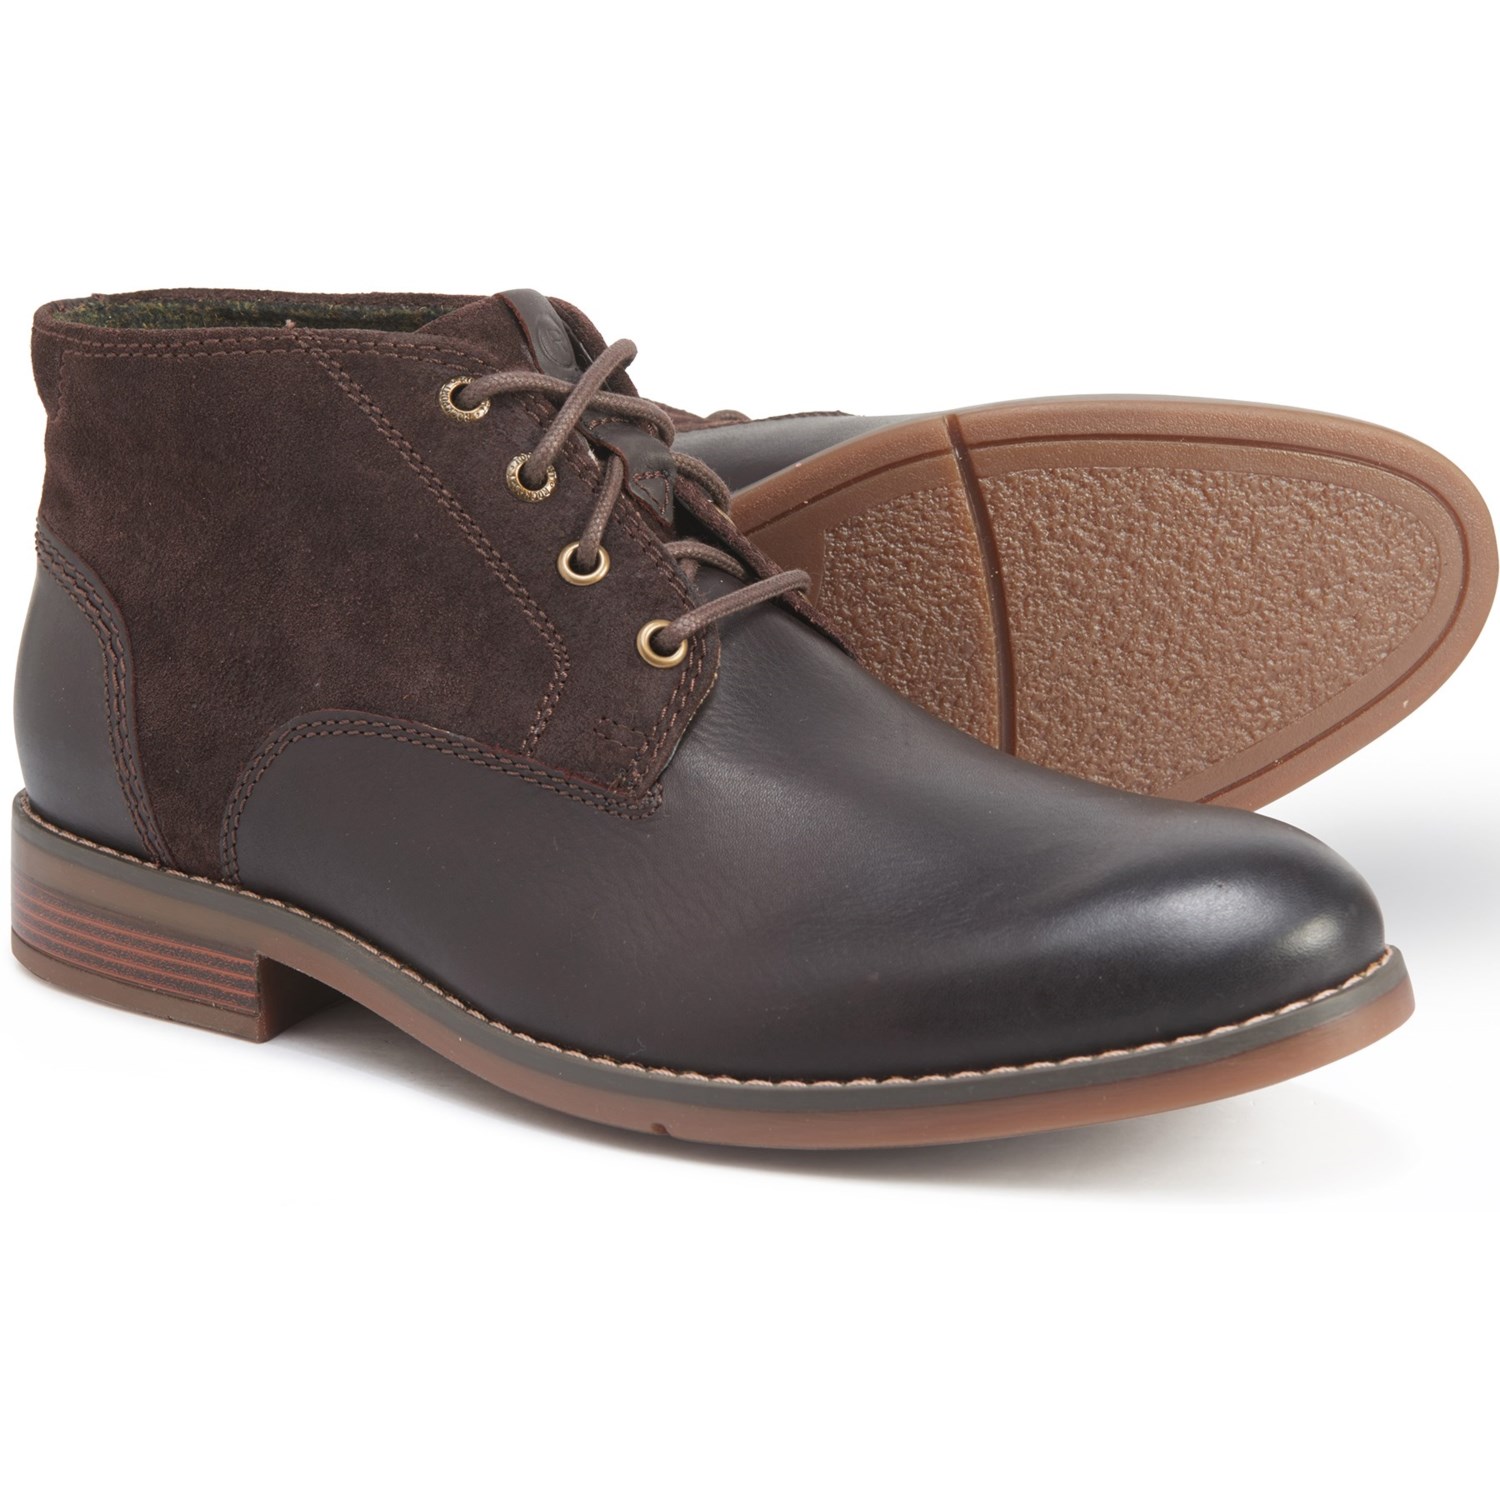 rockport chukka boots brown